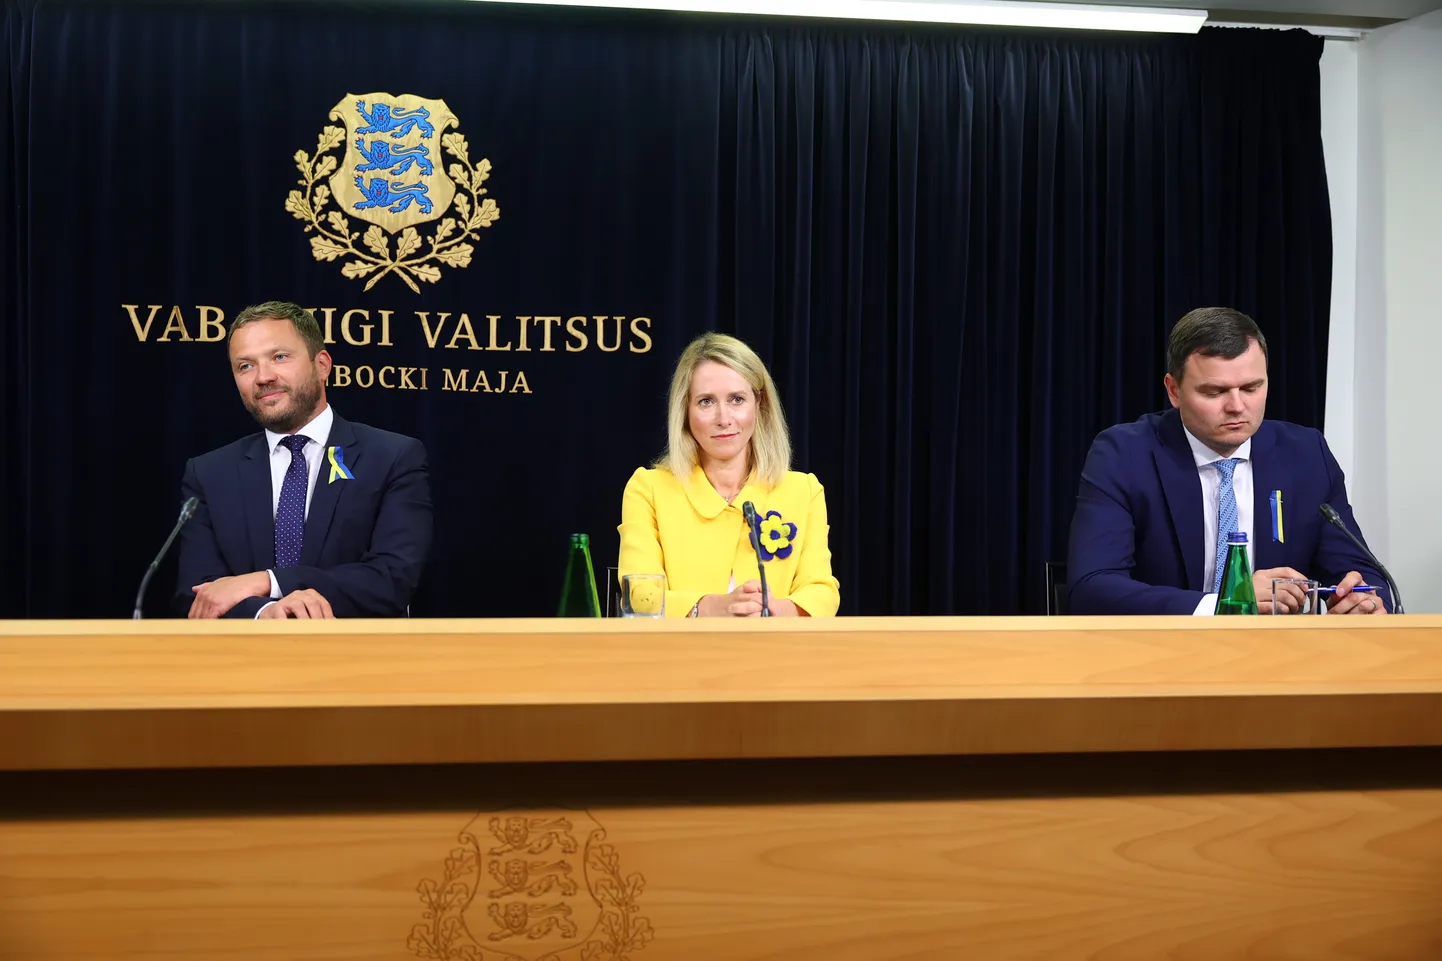 Valitsuse pressikonverents. Paaminister Kaja Kallas